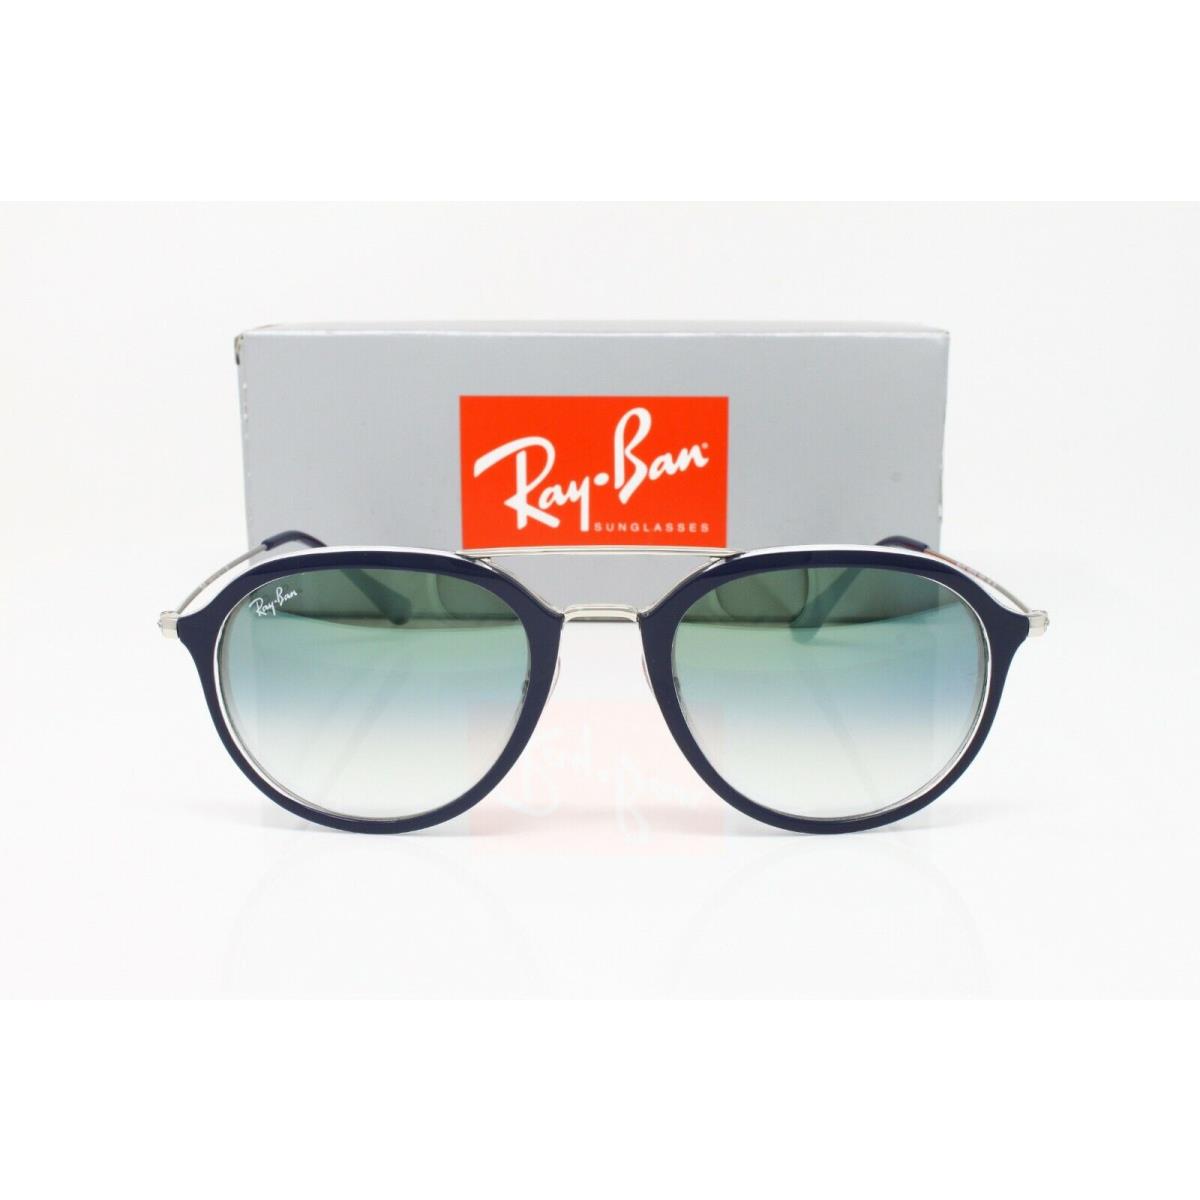 Ray Ban Sunglasses Pilot Blue Transparent Silver Size 50mm